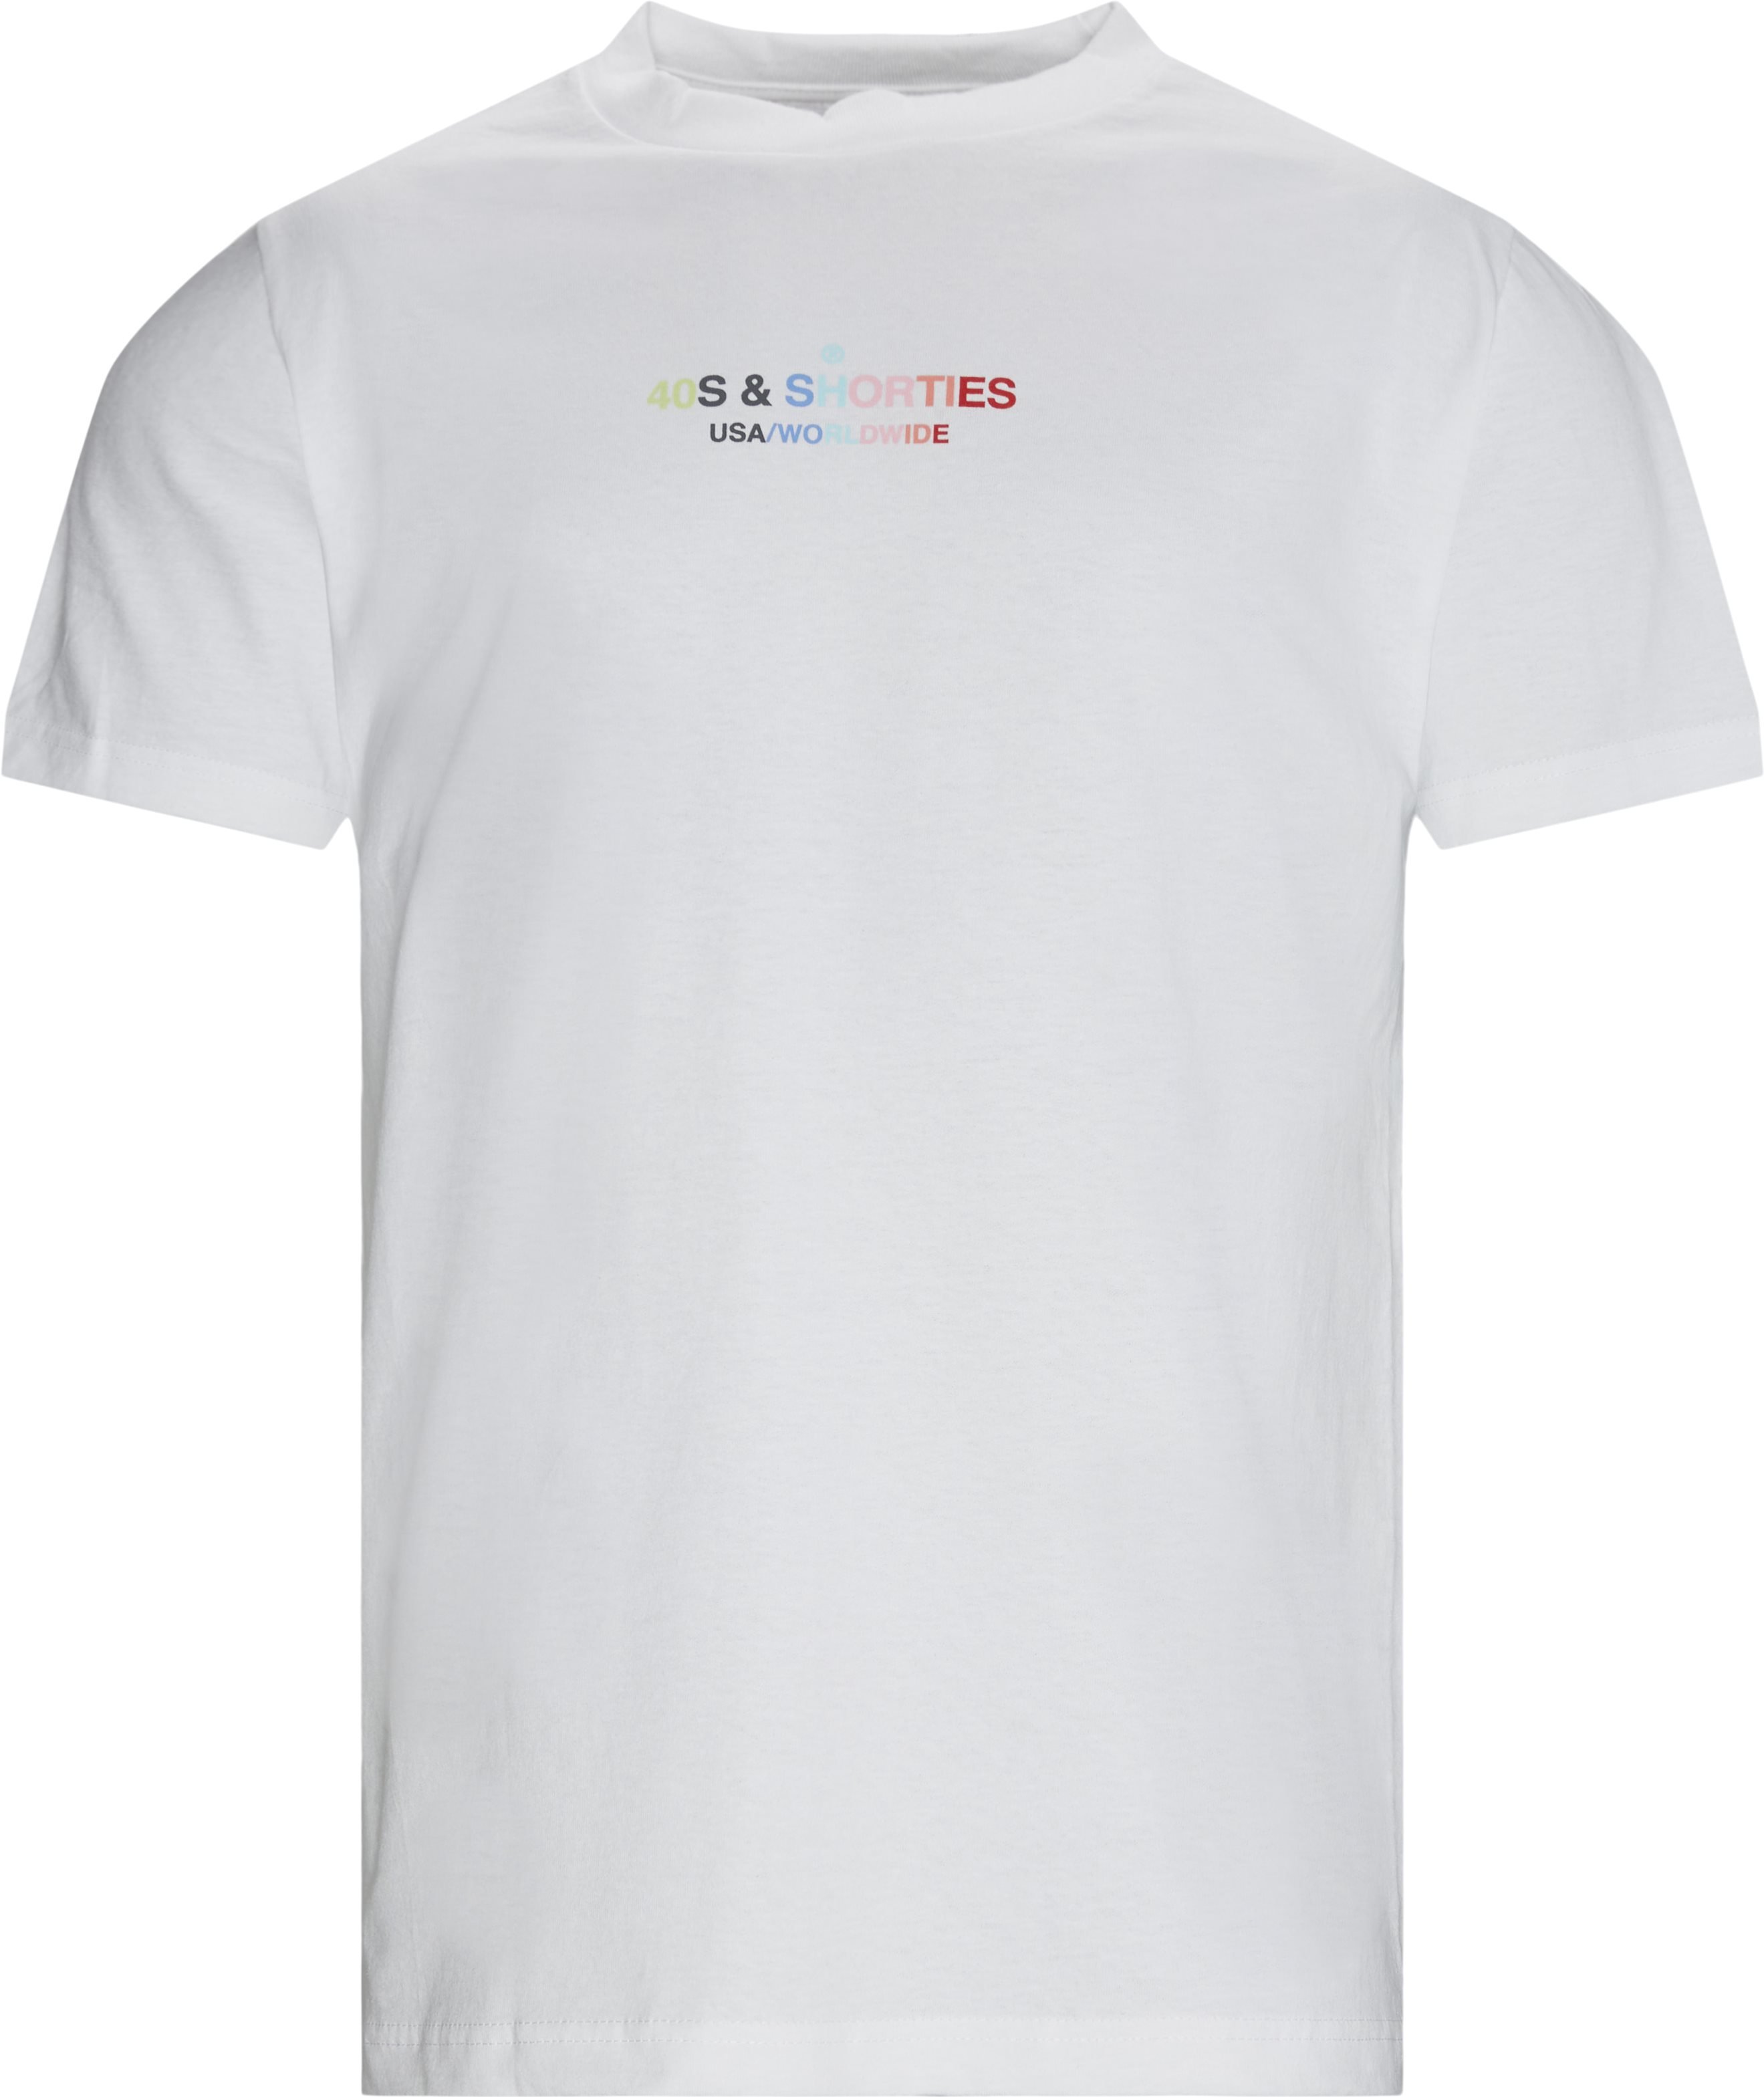 40S & SHORTIES T-shirts GENERAL TEXT LOGO TEE Vit